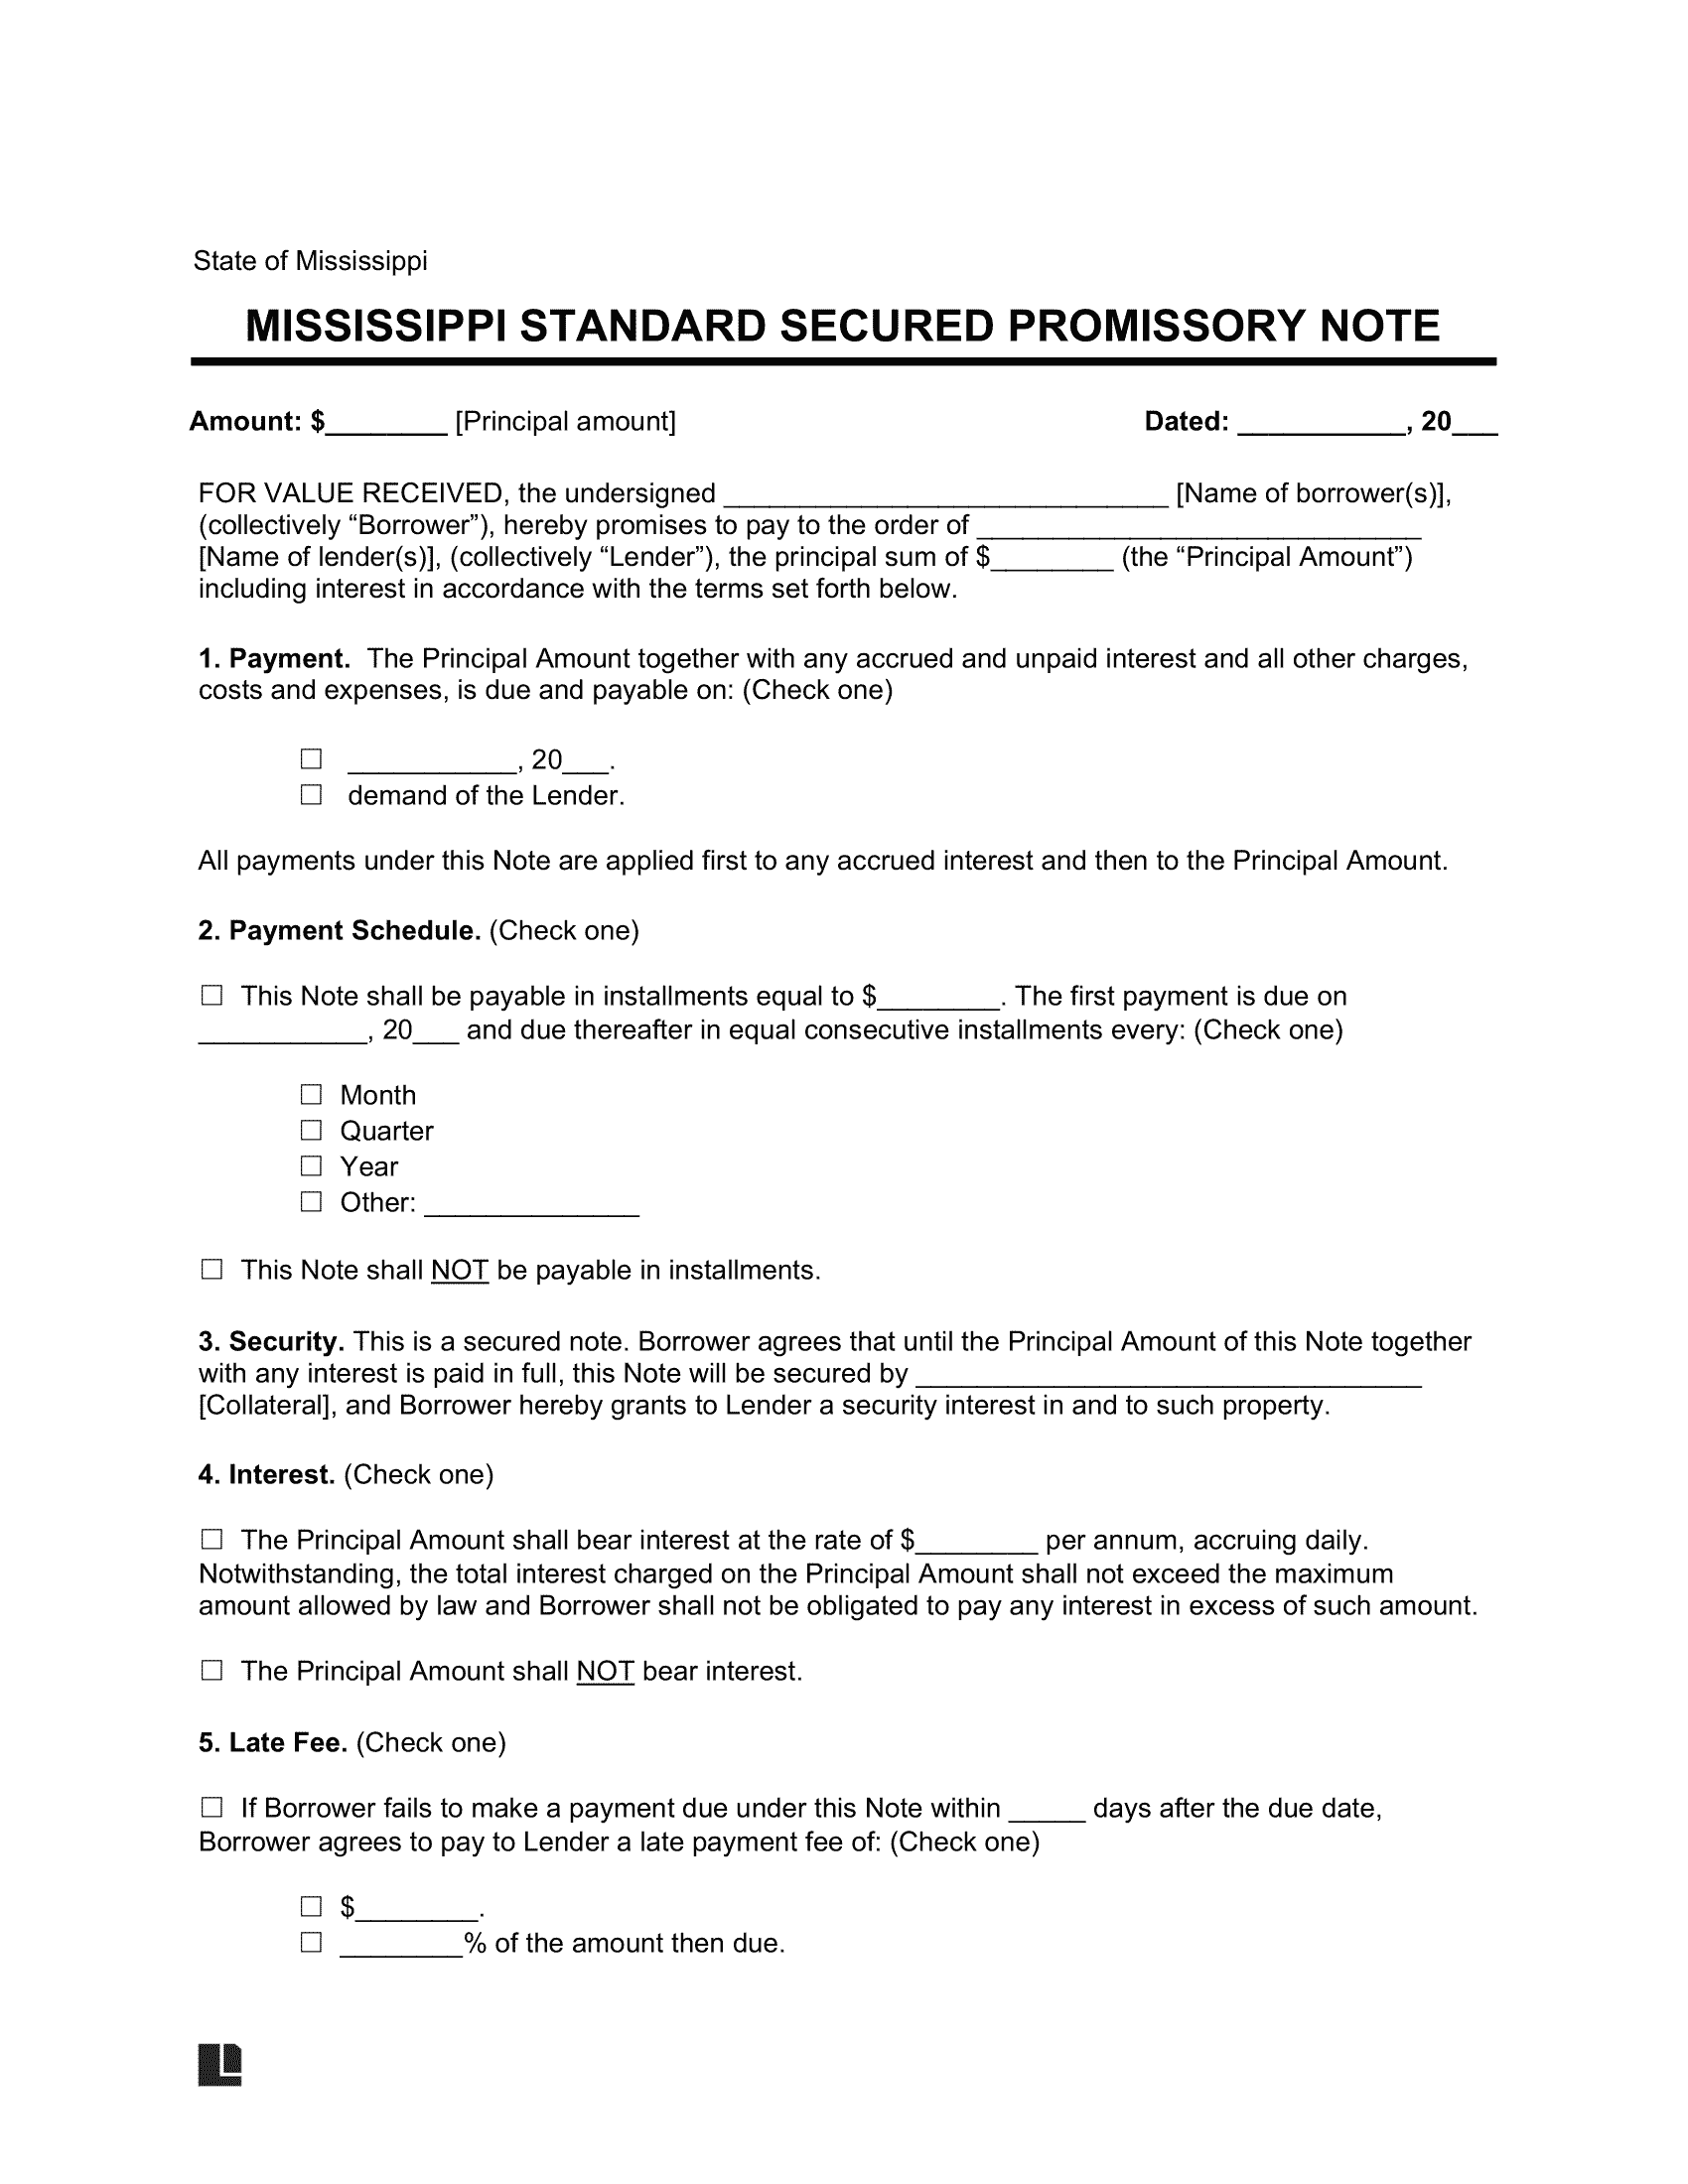 budget plan template pdf